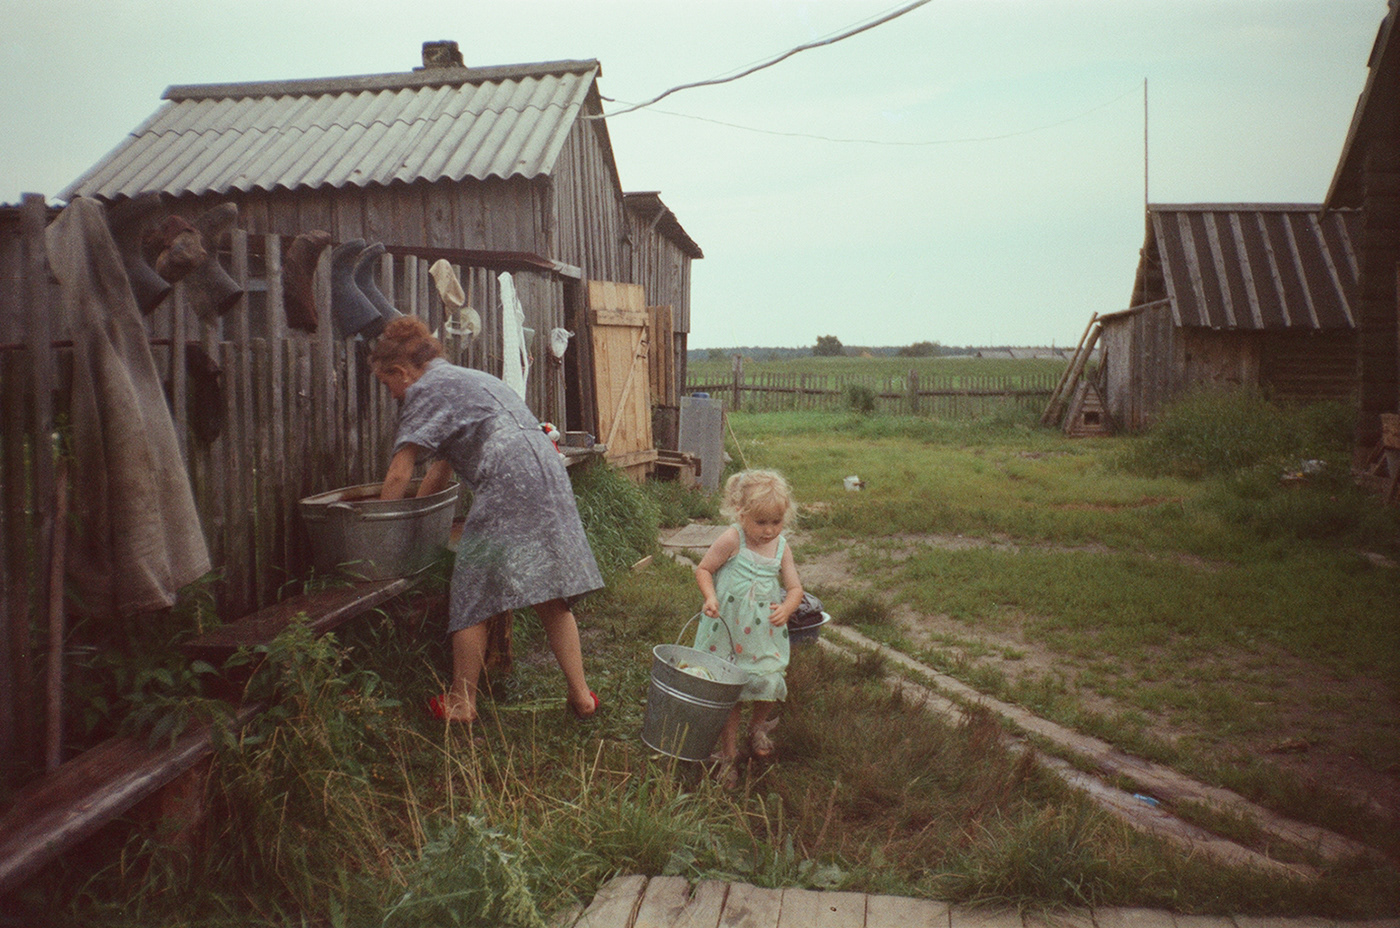 35mm 90s analog analog photography Film   Film photo film photography Russia Russian village village